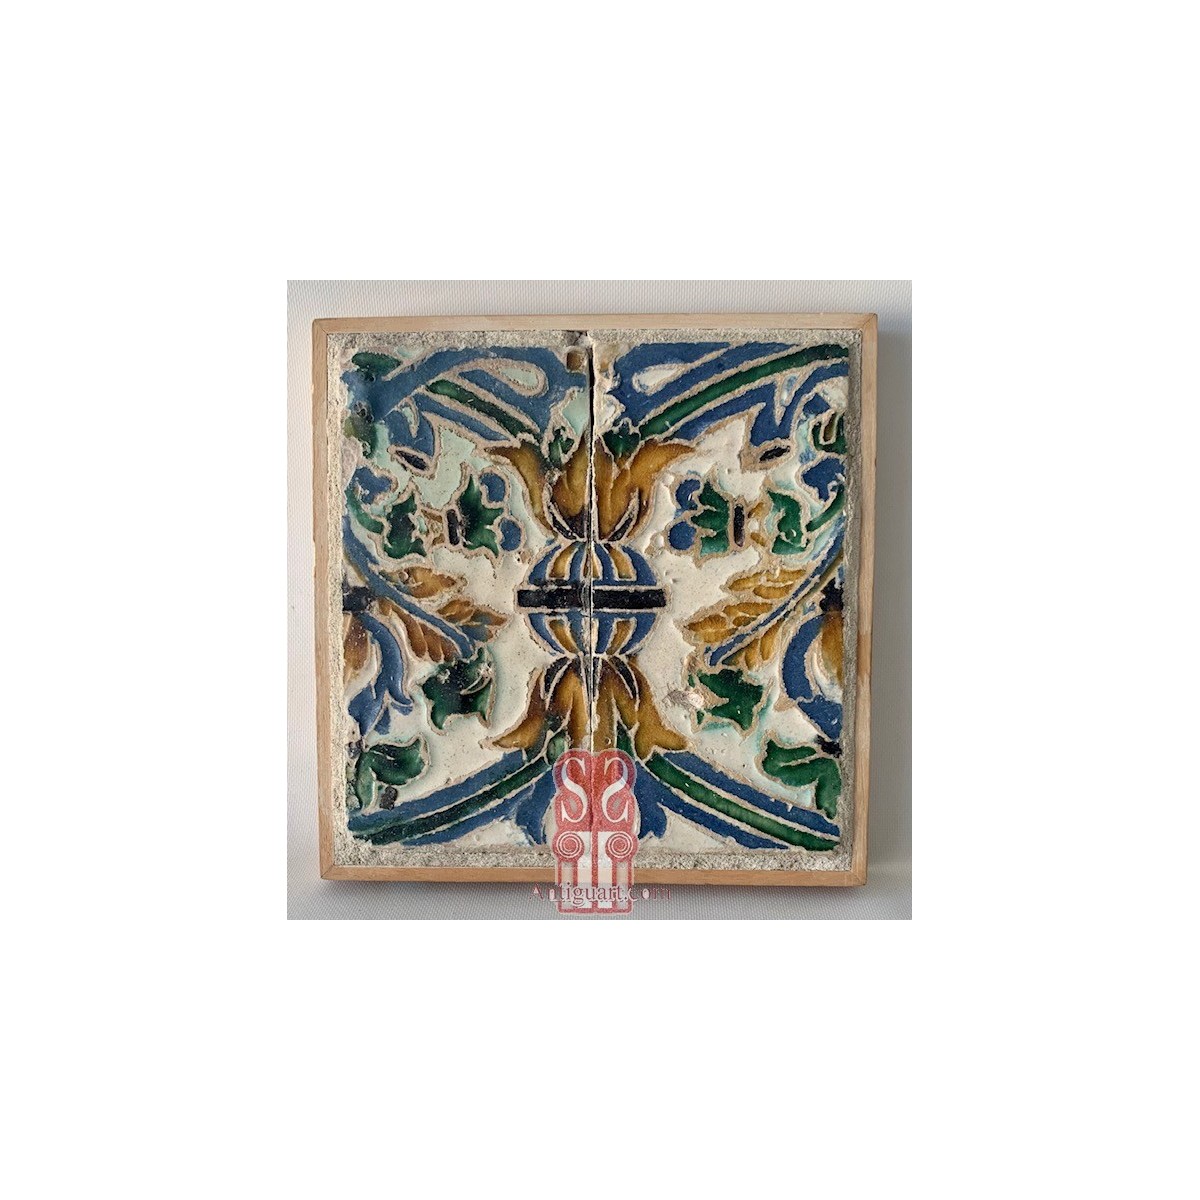 Pareja de azulejos del siglo XVI, Triana Sevilla